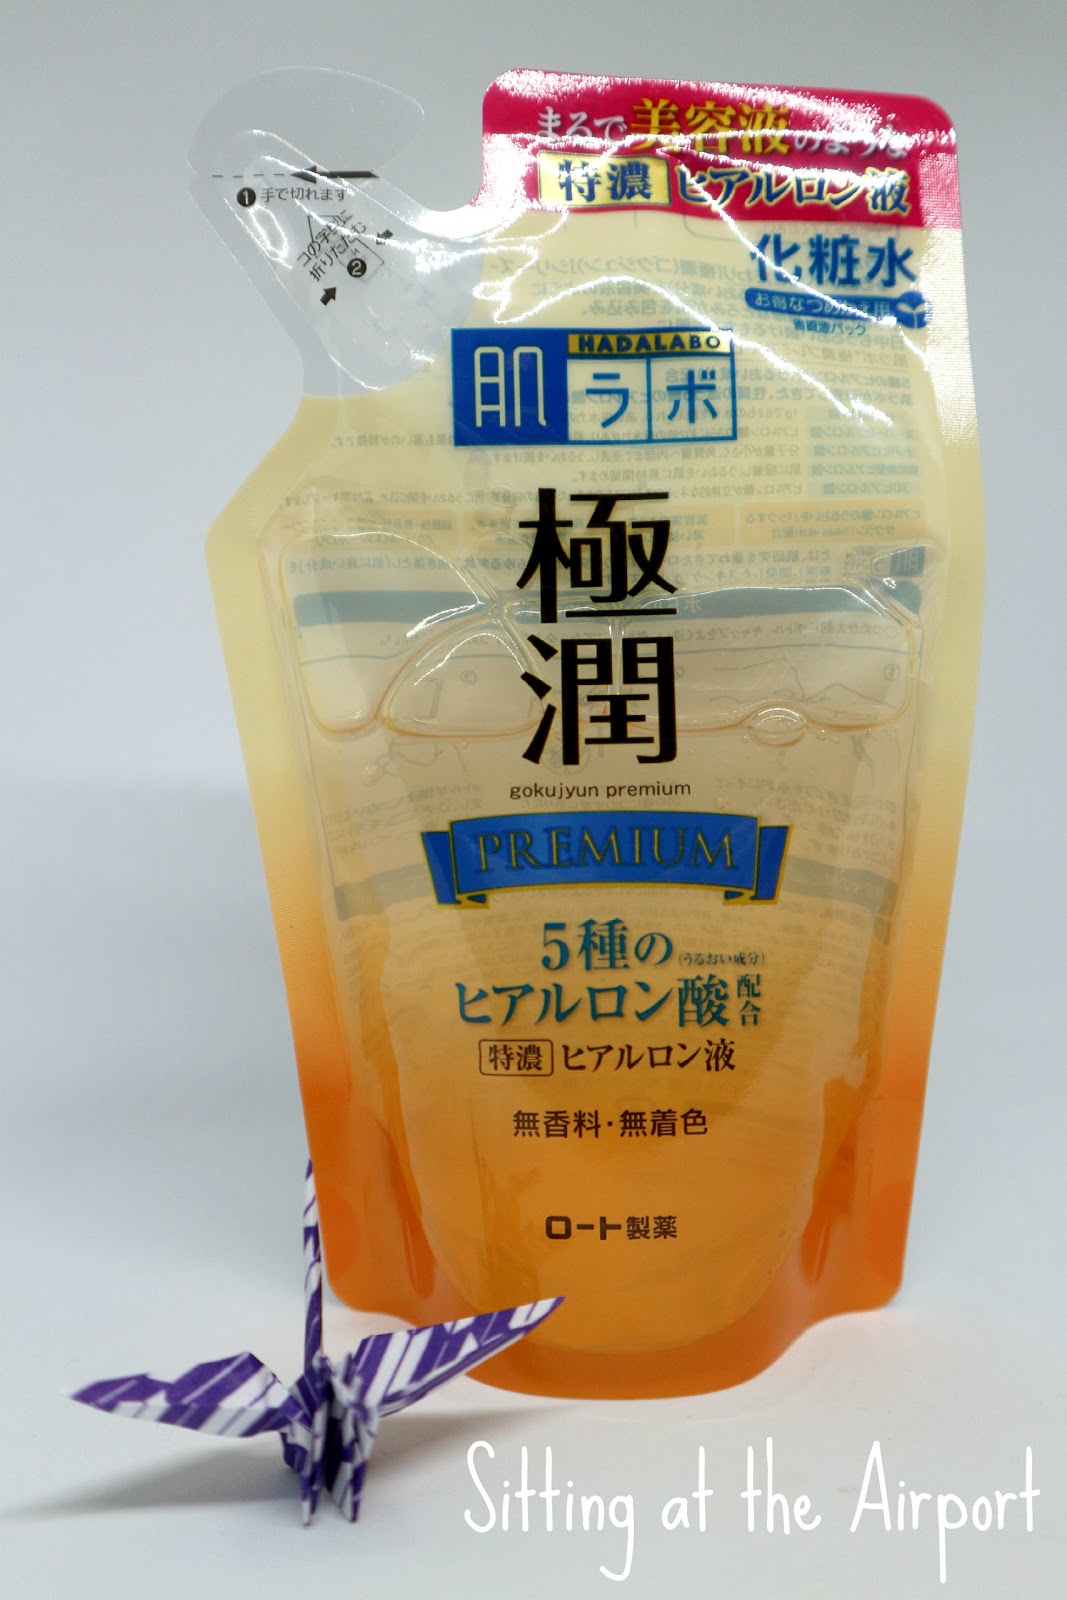 Hada Labo Gokujyun Premium Hyaluronic Acid Lotion Review